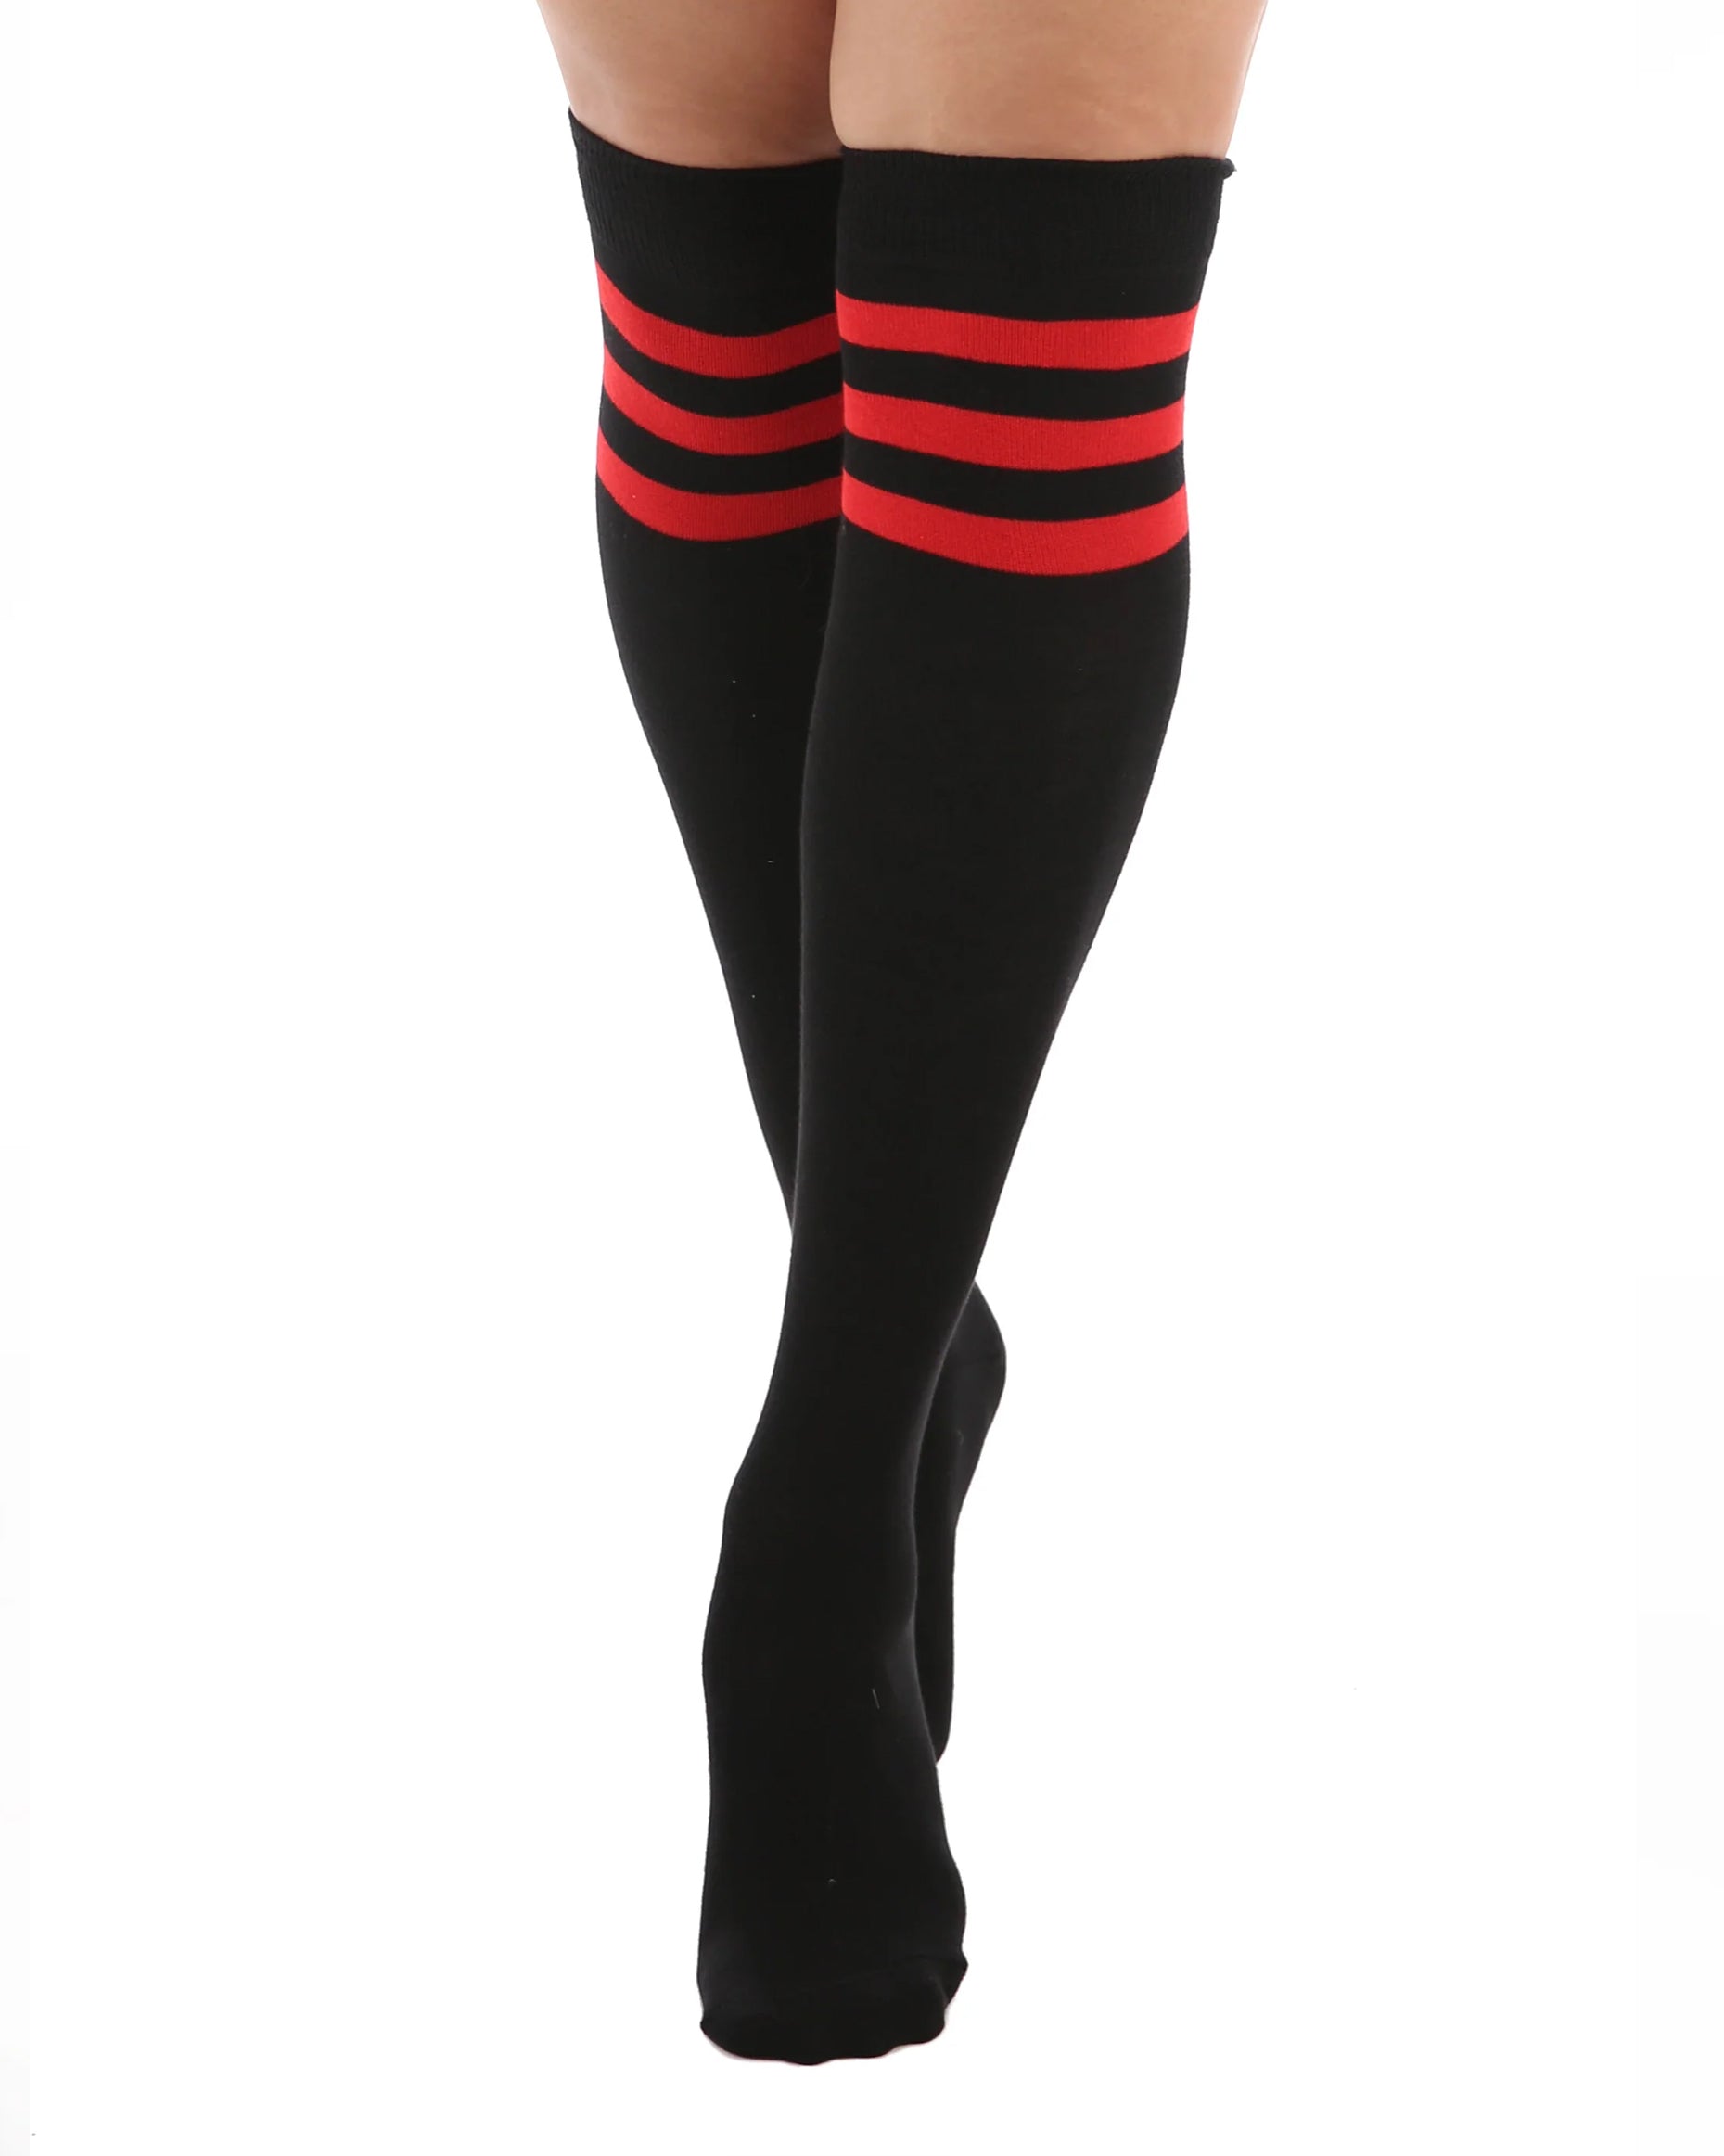 Pamela Mann Referee Over The Knee Socks - black cotton thigh high socks with 3 red stripes